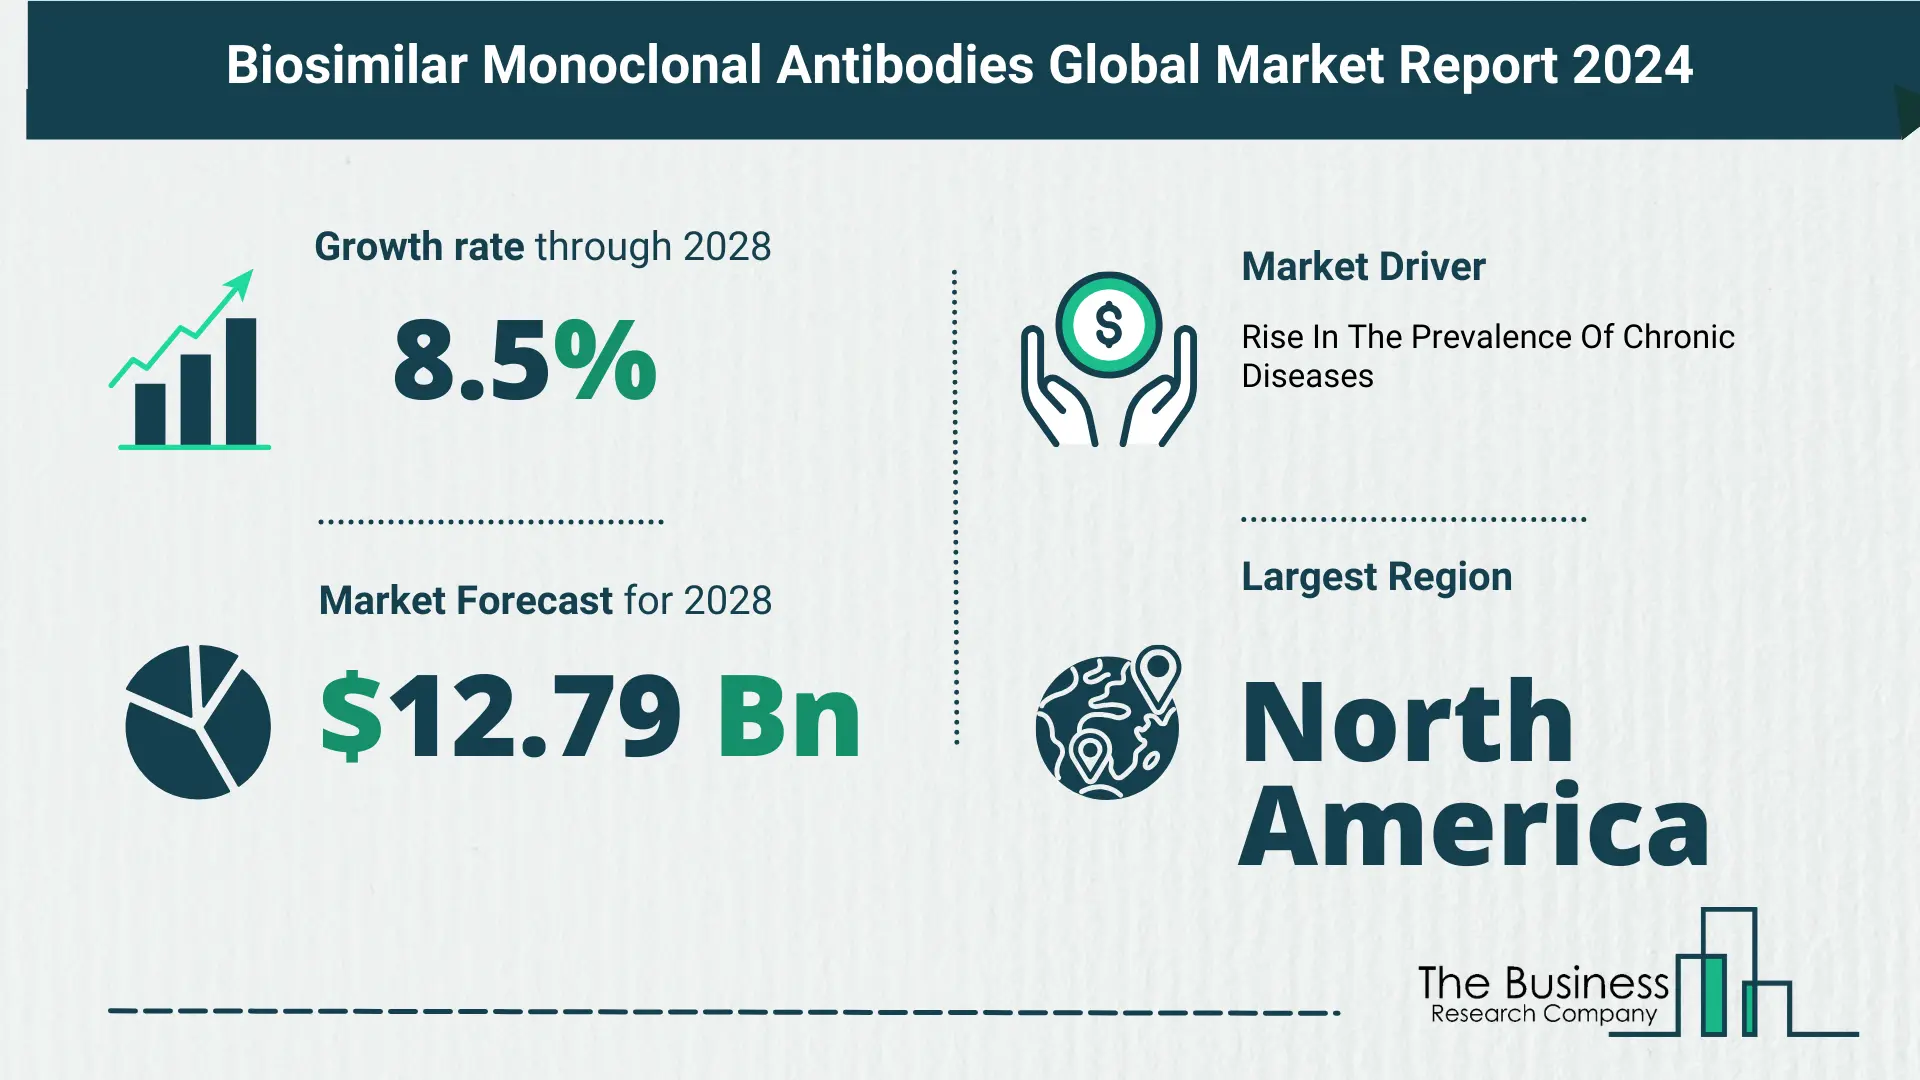 Global Biosimilar Monoclonal Antibodies Market Size